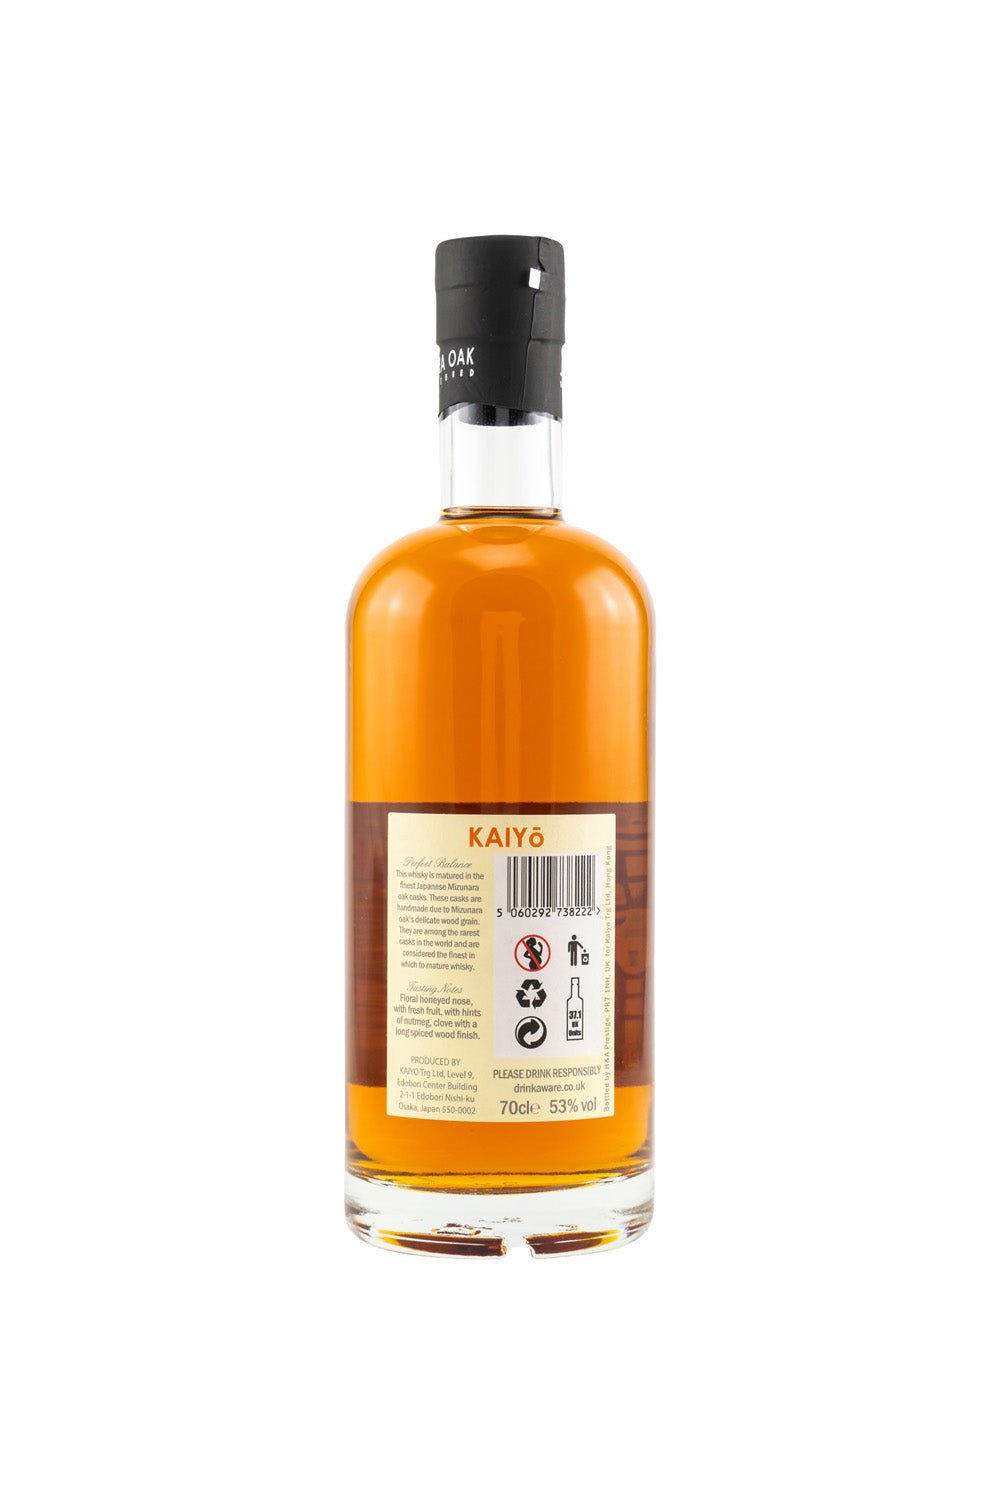 Kaiyo Cask Strength Japanese Mizunara Oak Blended Whisky 53% vol. 700ml - Maltimore